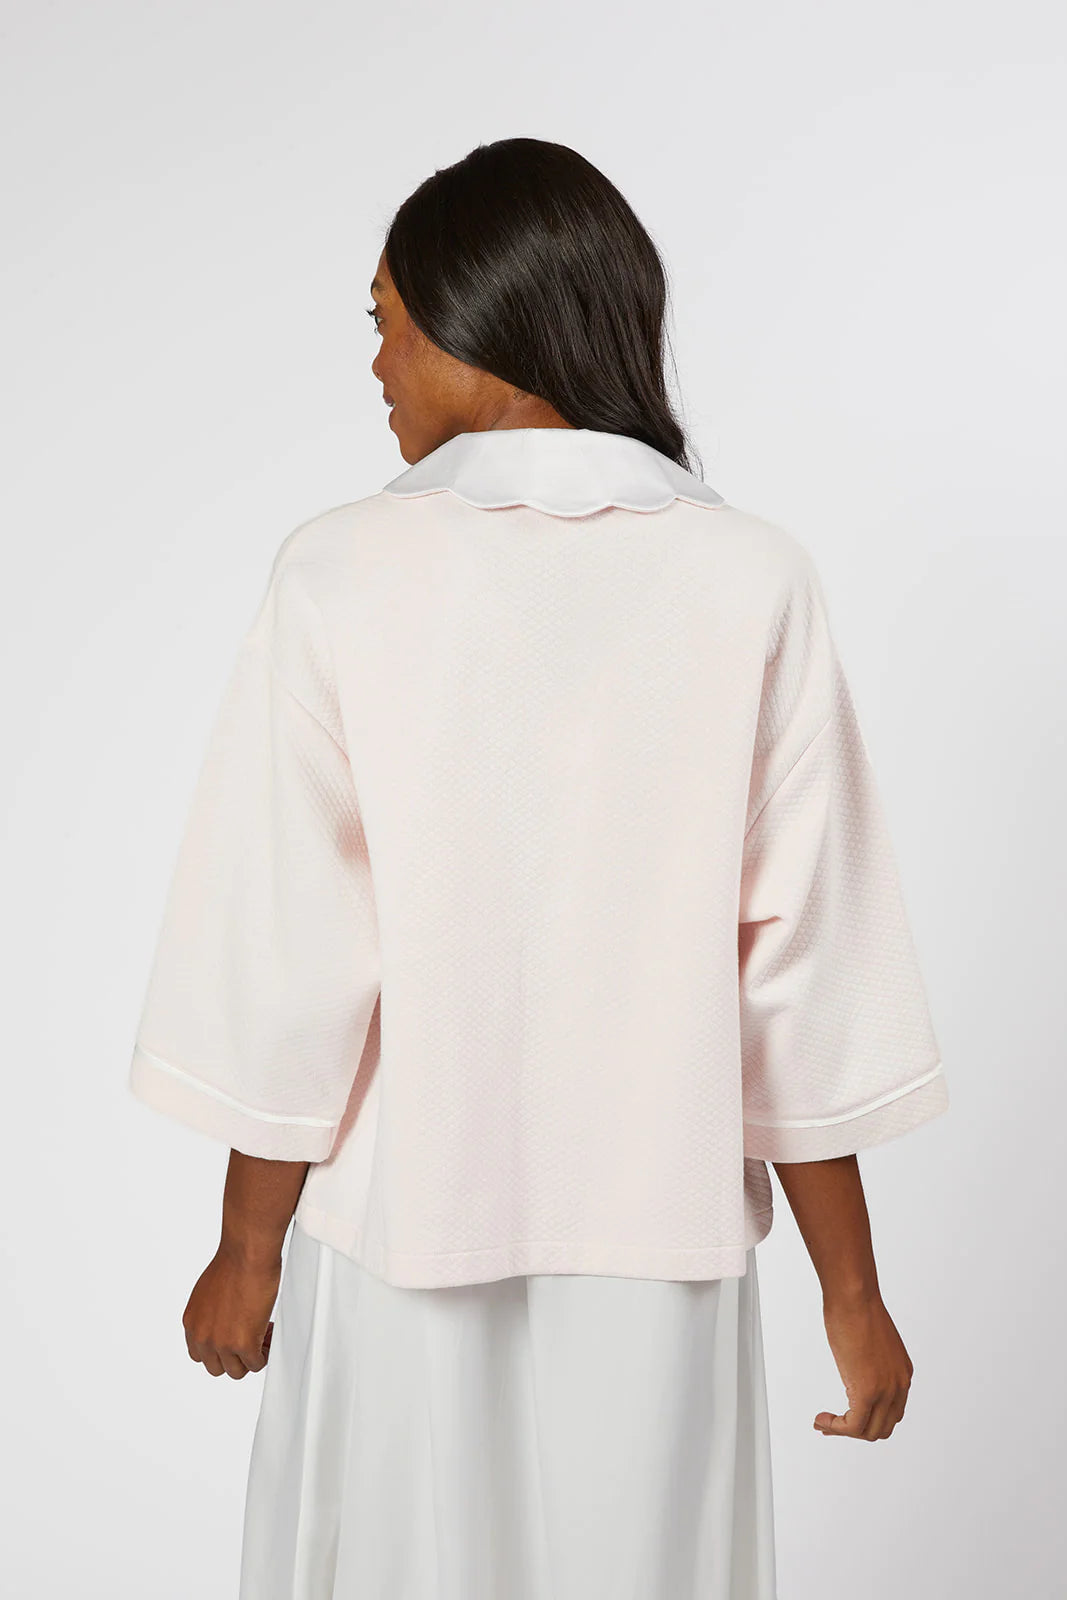 Helen Cotton Bedjacket in Pink By Lenora - S-XL